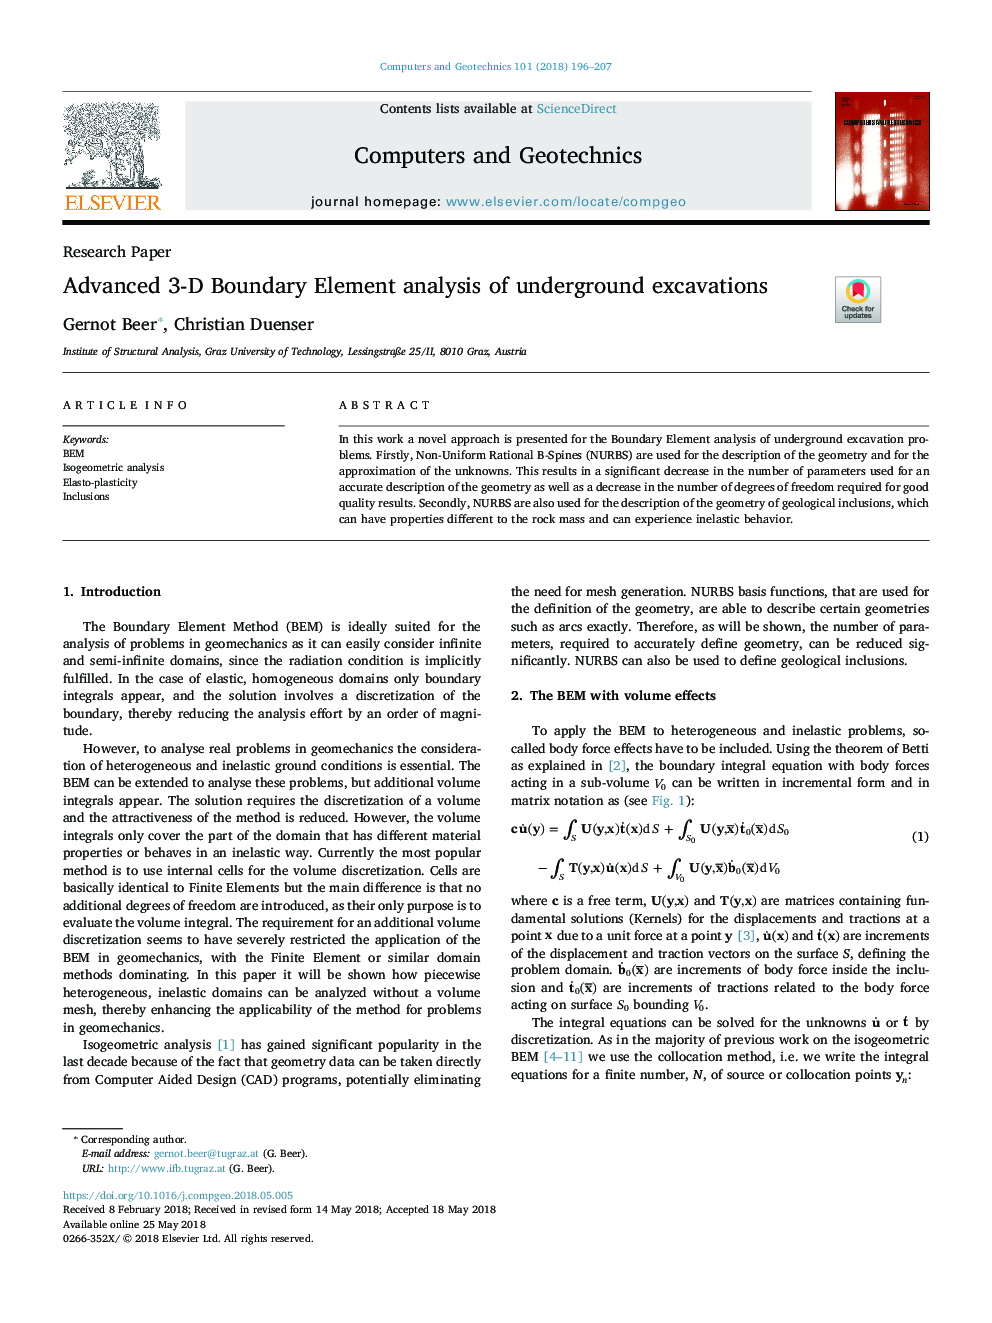 Advanced 3-D Boundary Element analysis of underground excavations